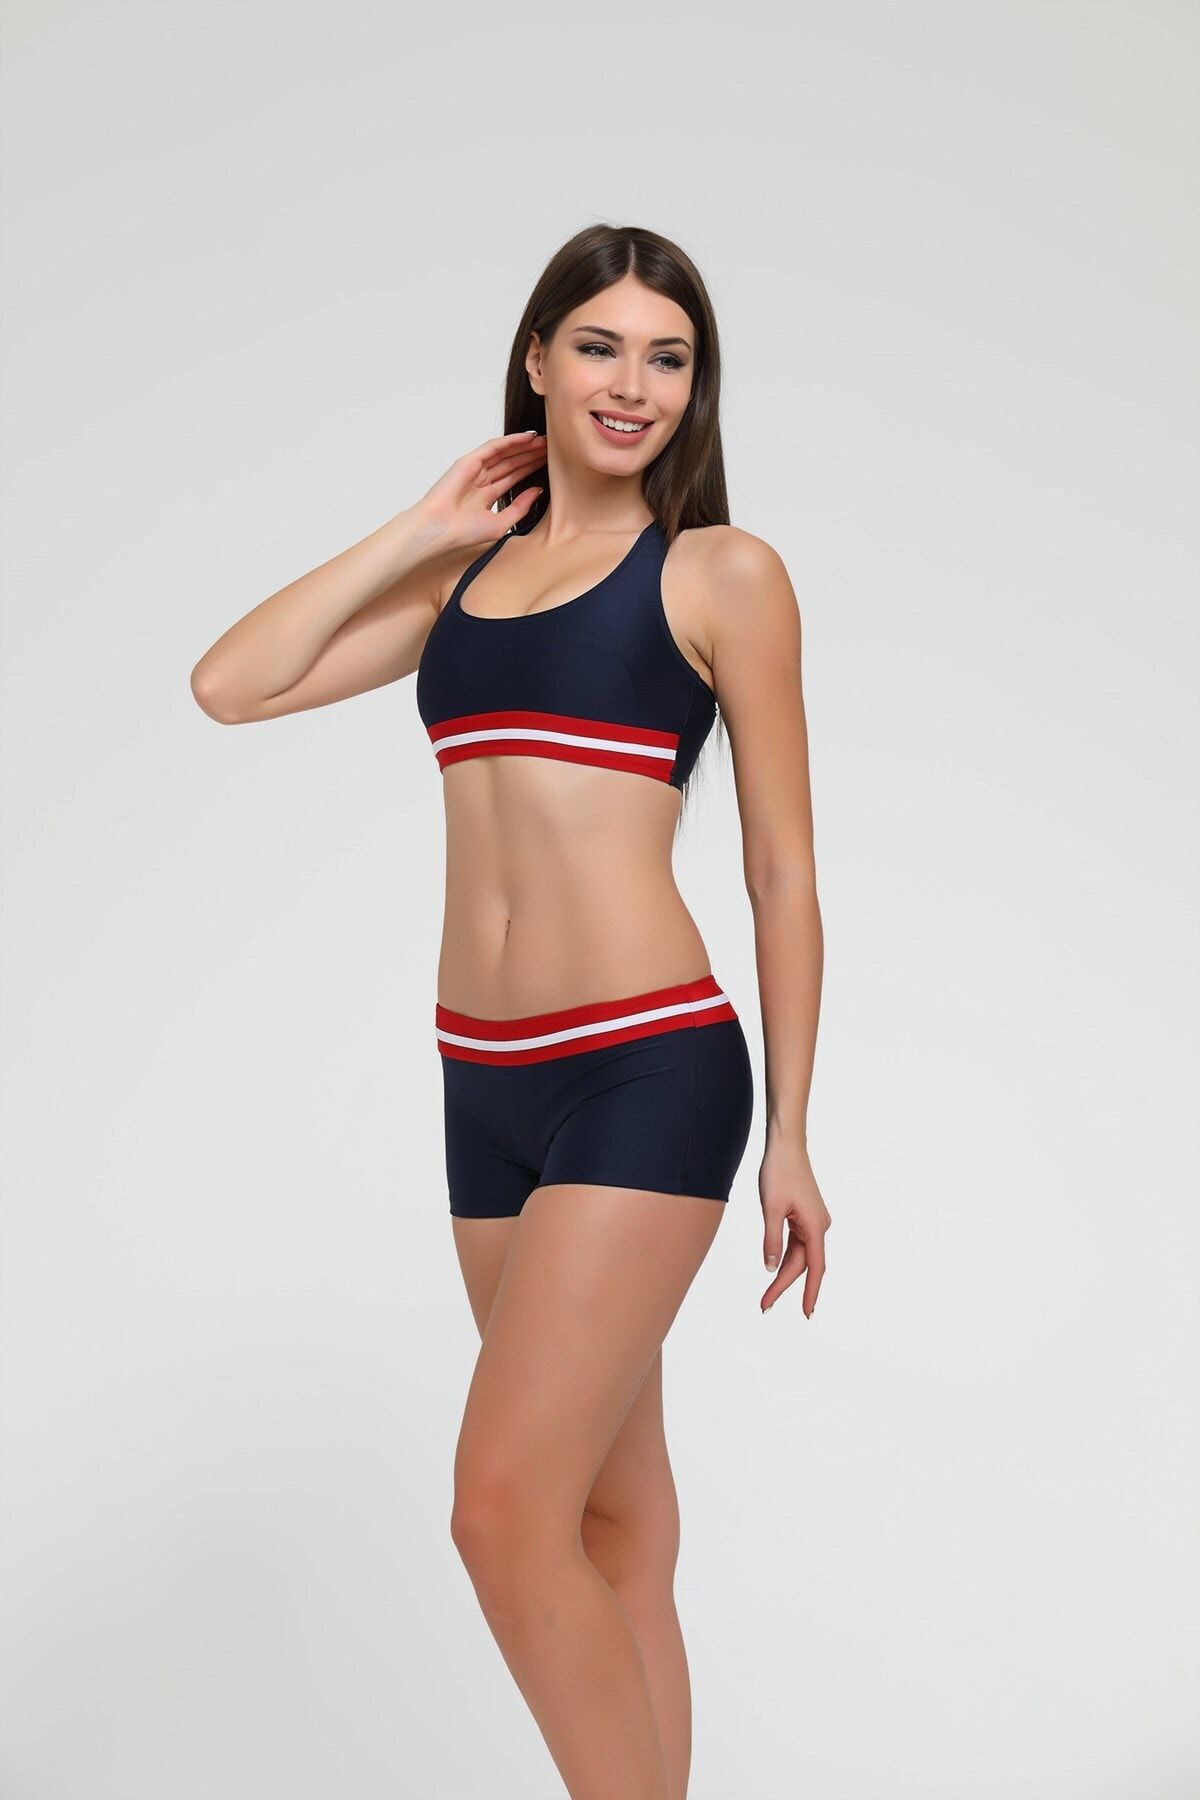 Chelly Tasarım Kadın Yüzücü Bady Bikini 9970